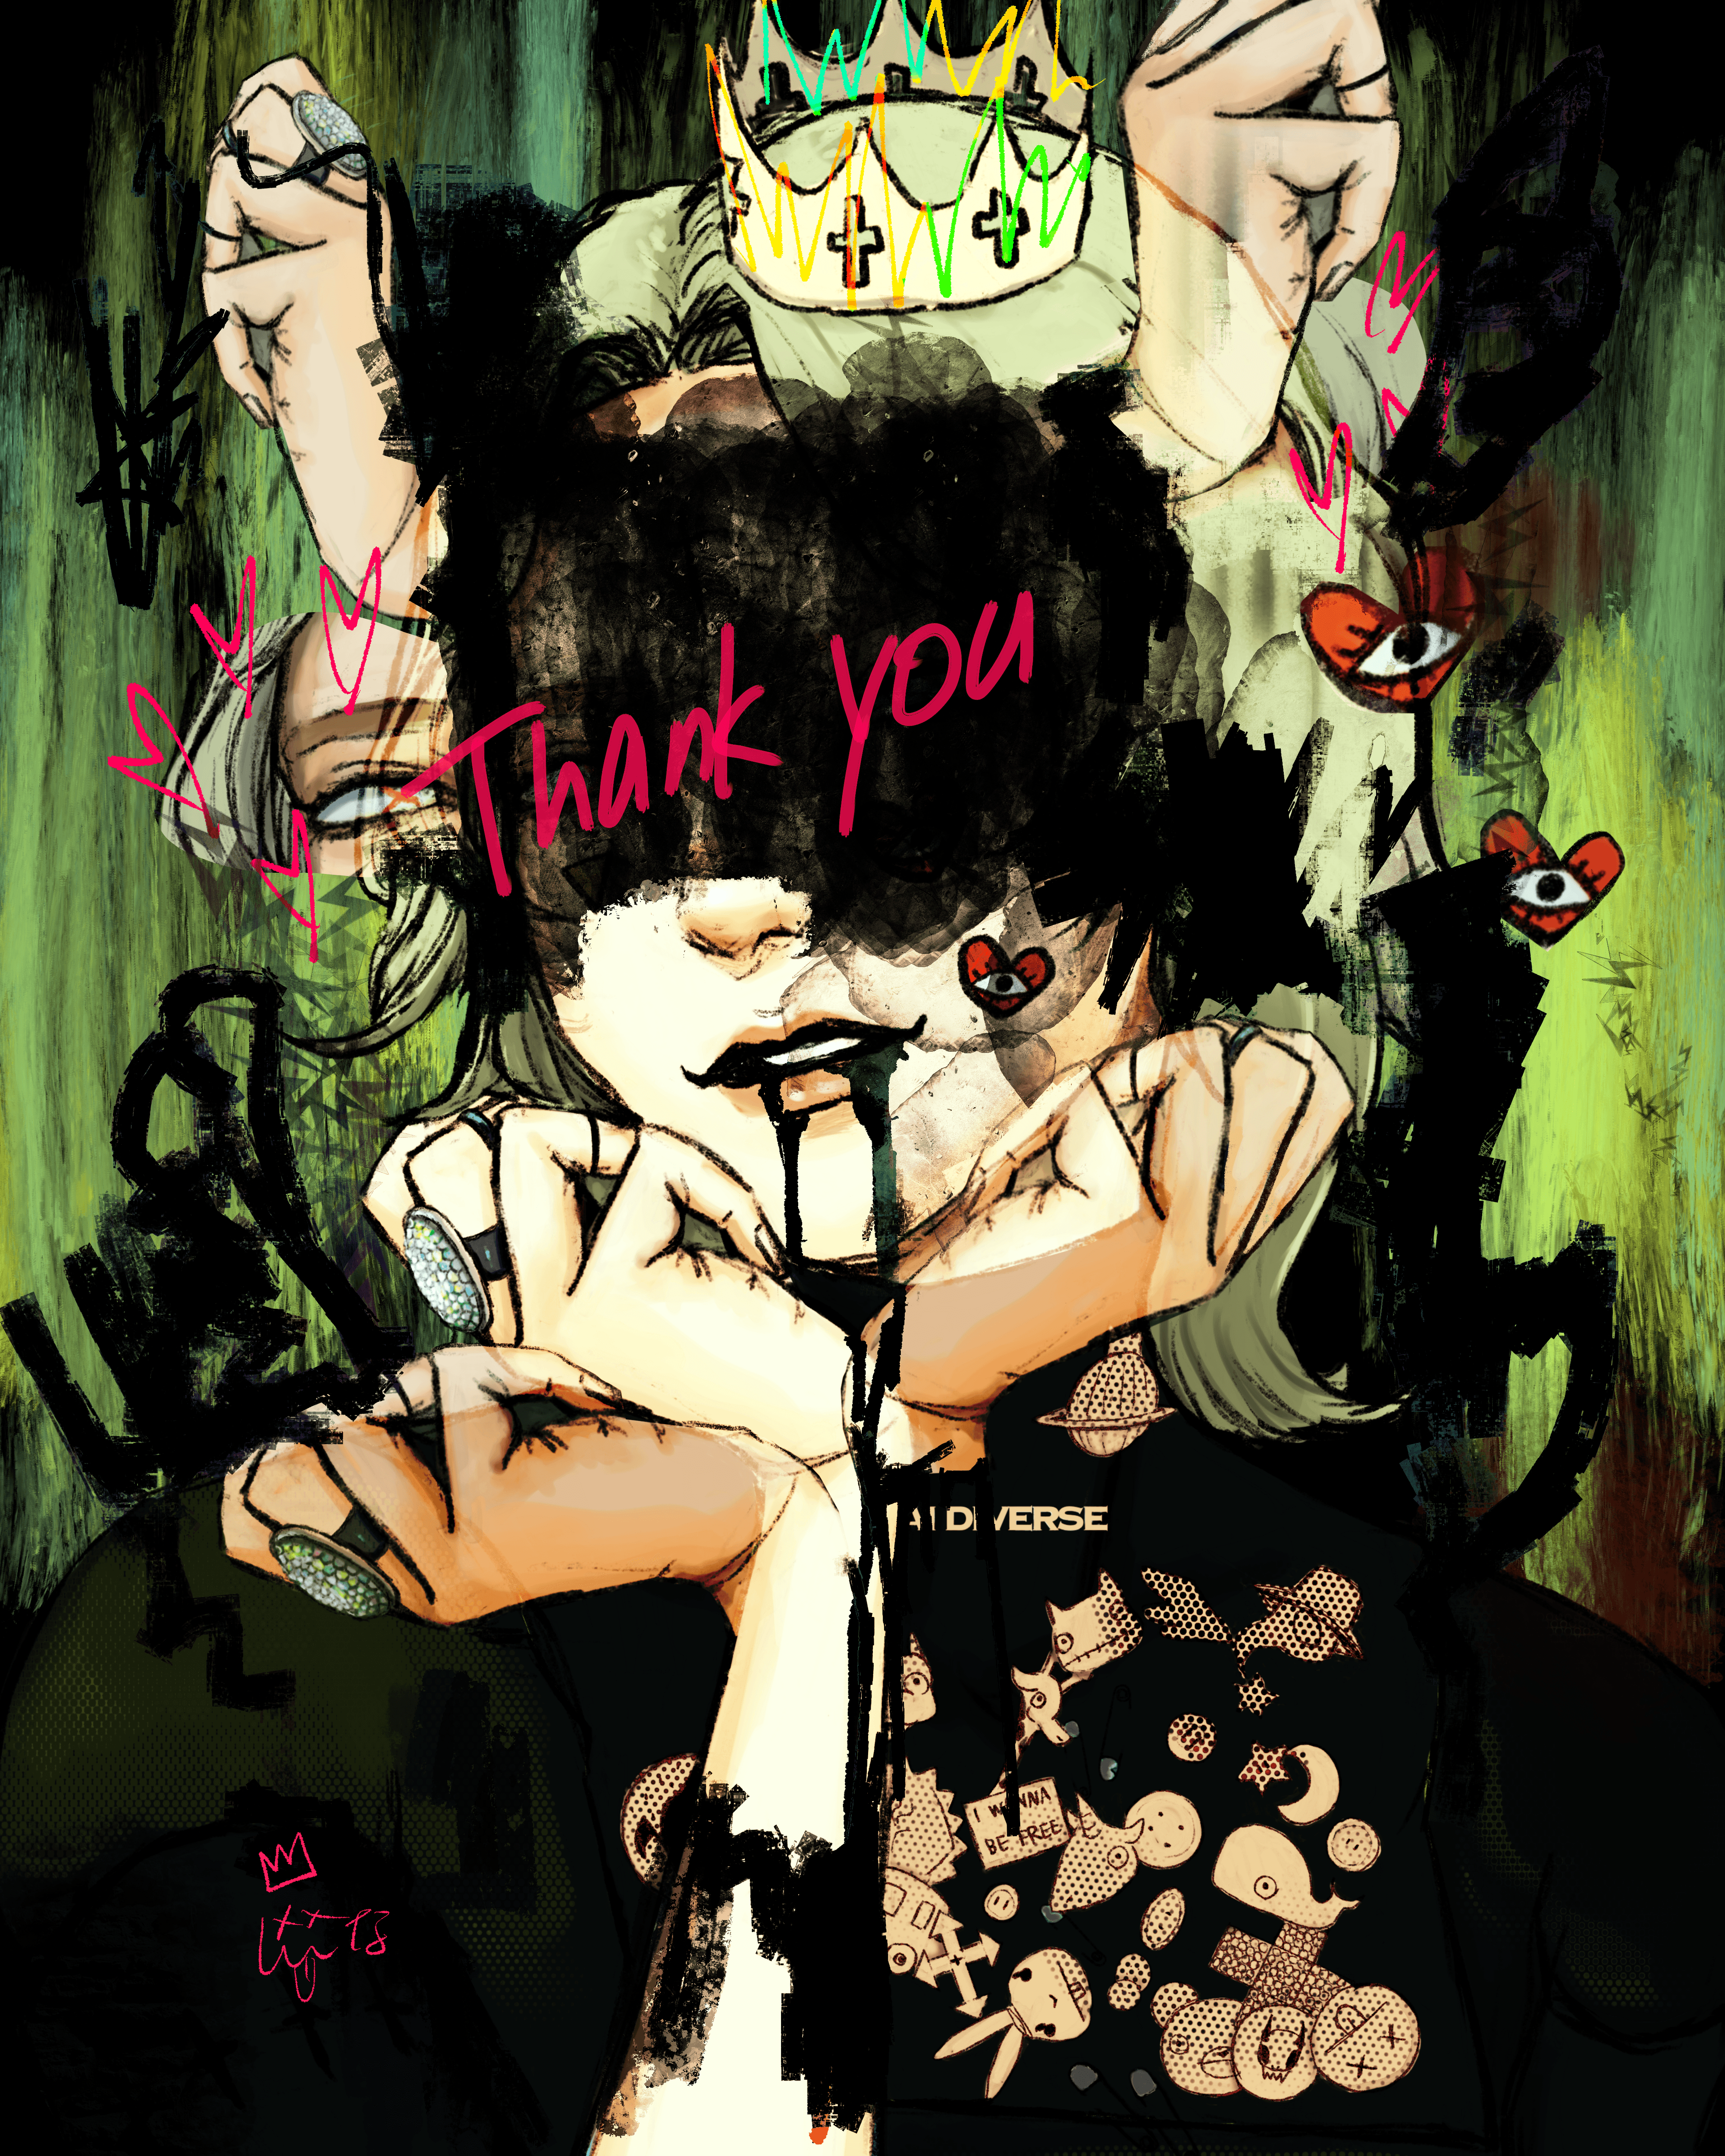 Thank you-Black chaos